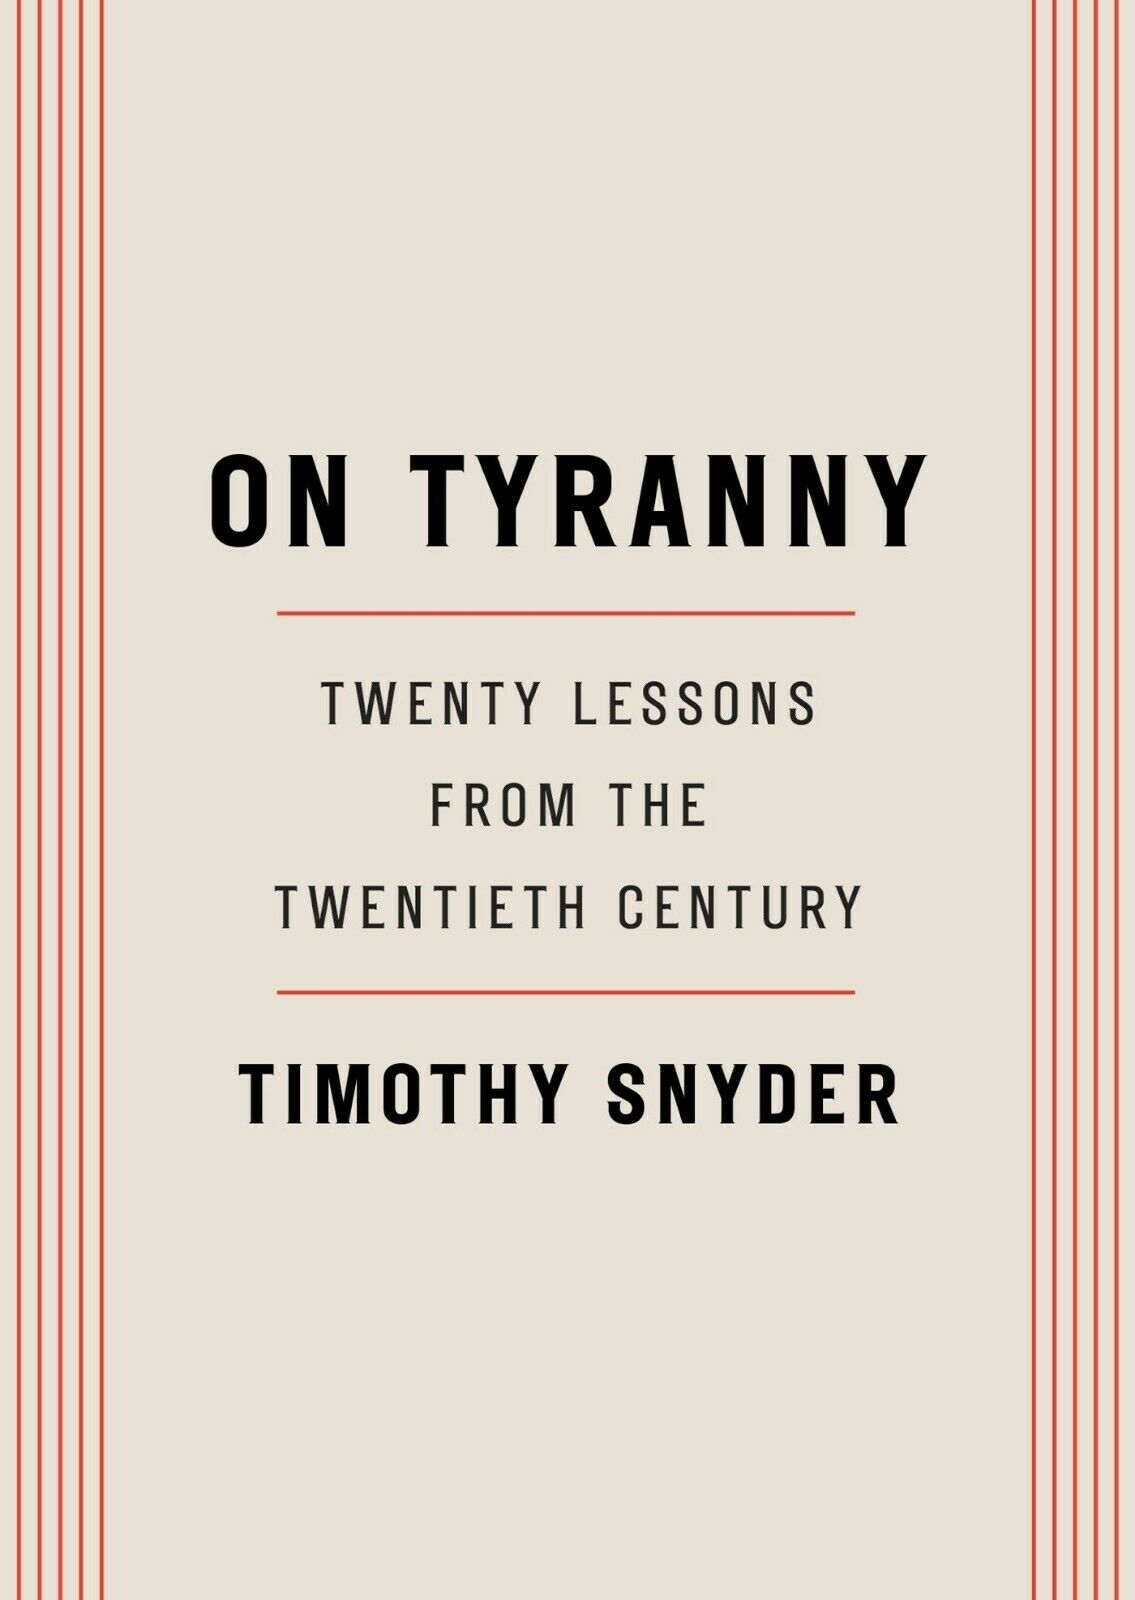 on tyranny twenty lessons from the twentieth century summary